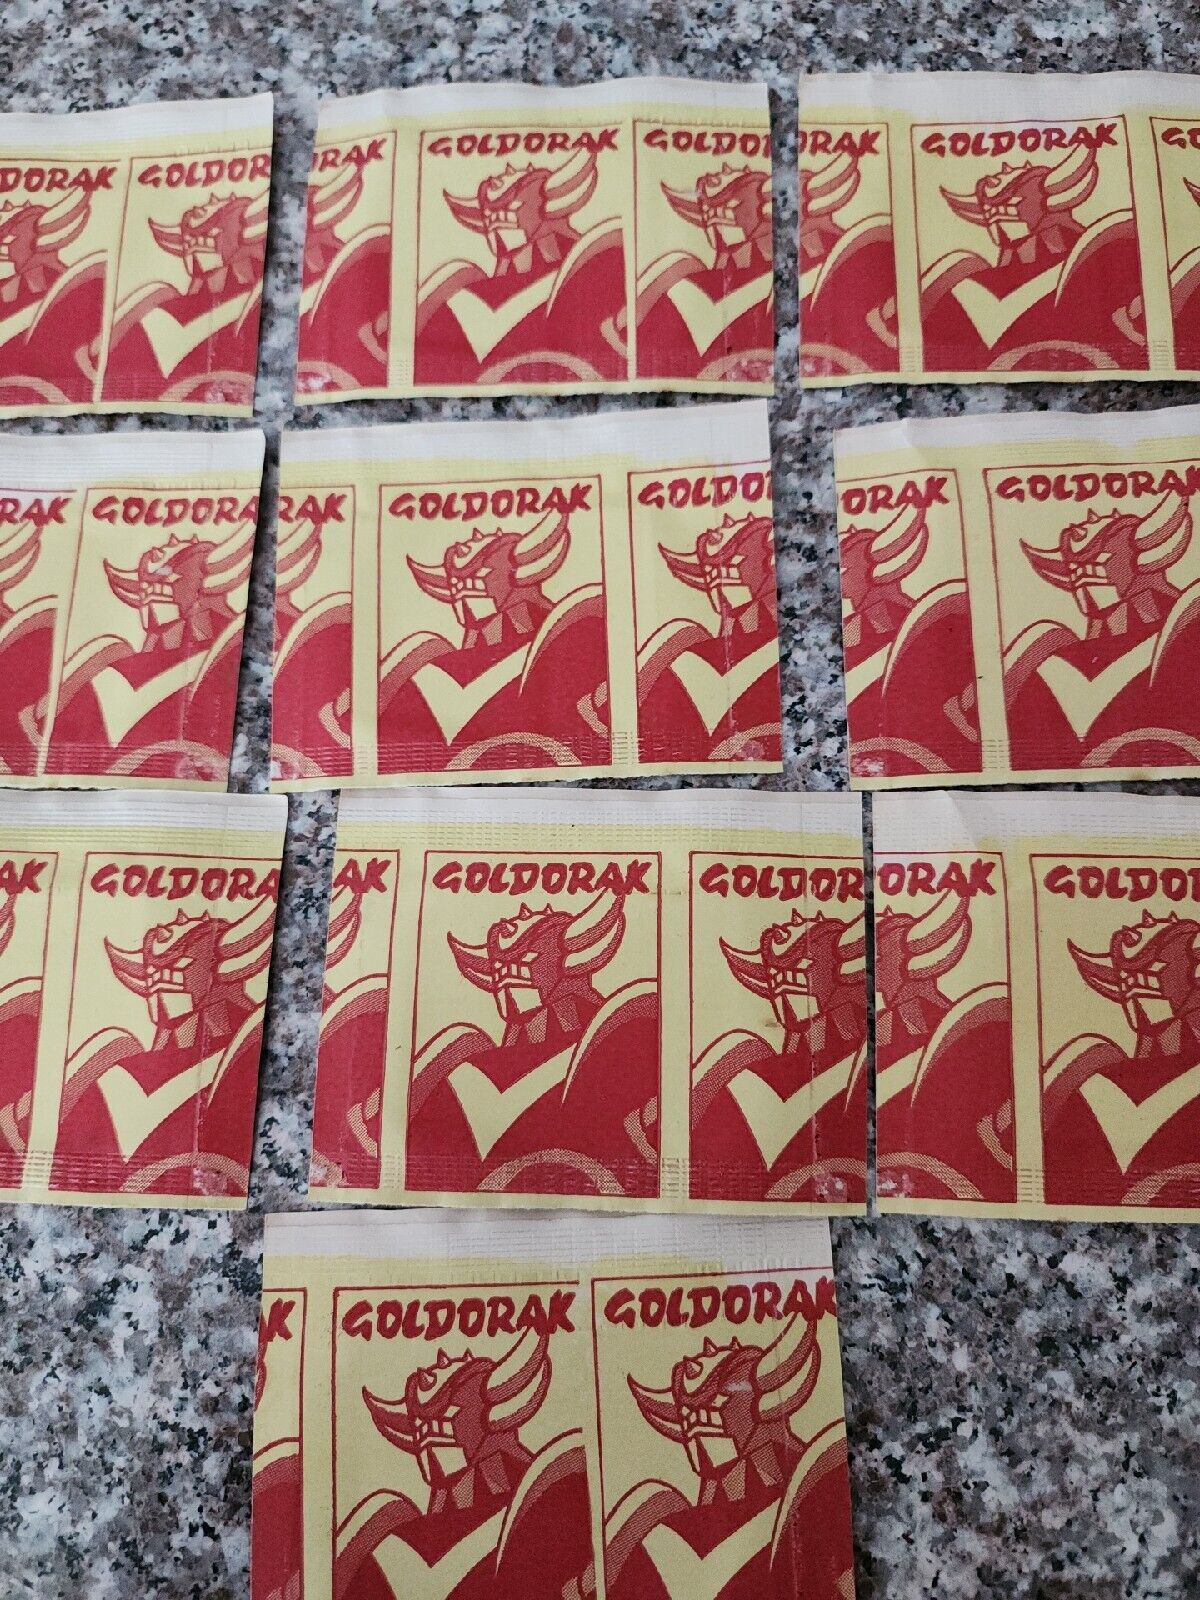 1980s GOLDORAK STICKER PACKS VENEZUELA  Lot of 10 packs. Rare VINTAGE